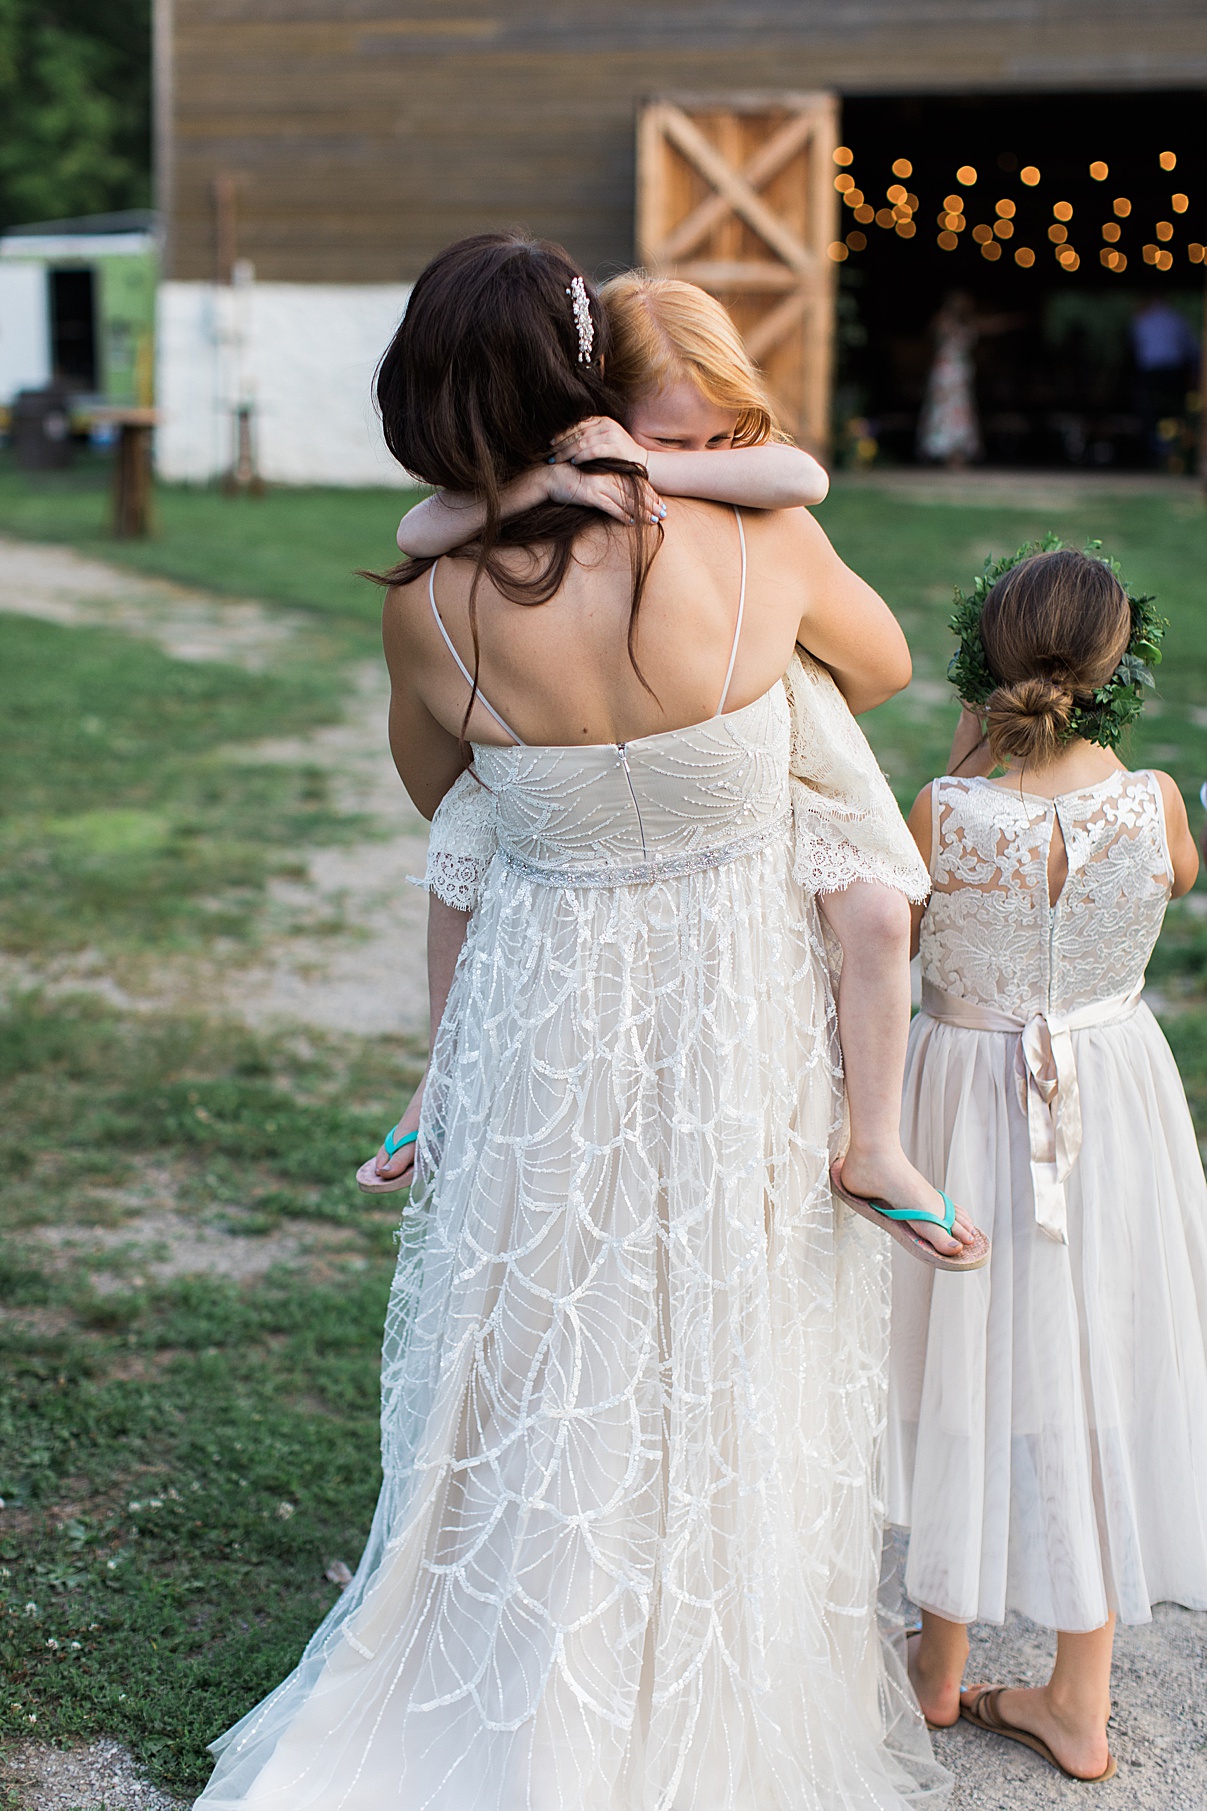 Bride walking while holding flower girl | Balls Falls, Ontario Wedding| Ontario Wedding Photographer| Toronto Wedding Photographer| 3Photography| 3photography.ca